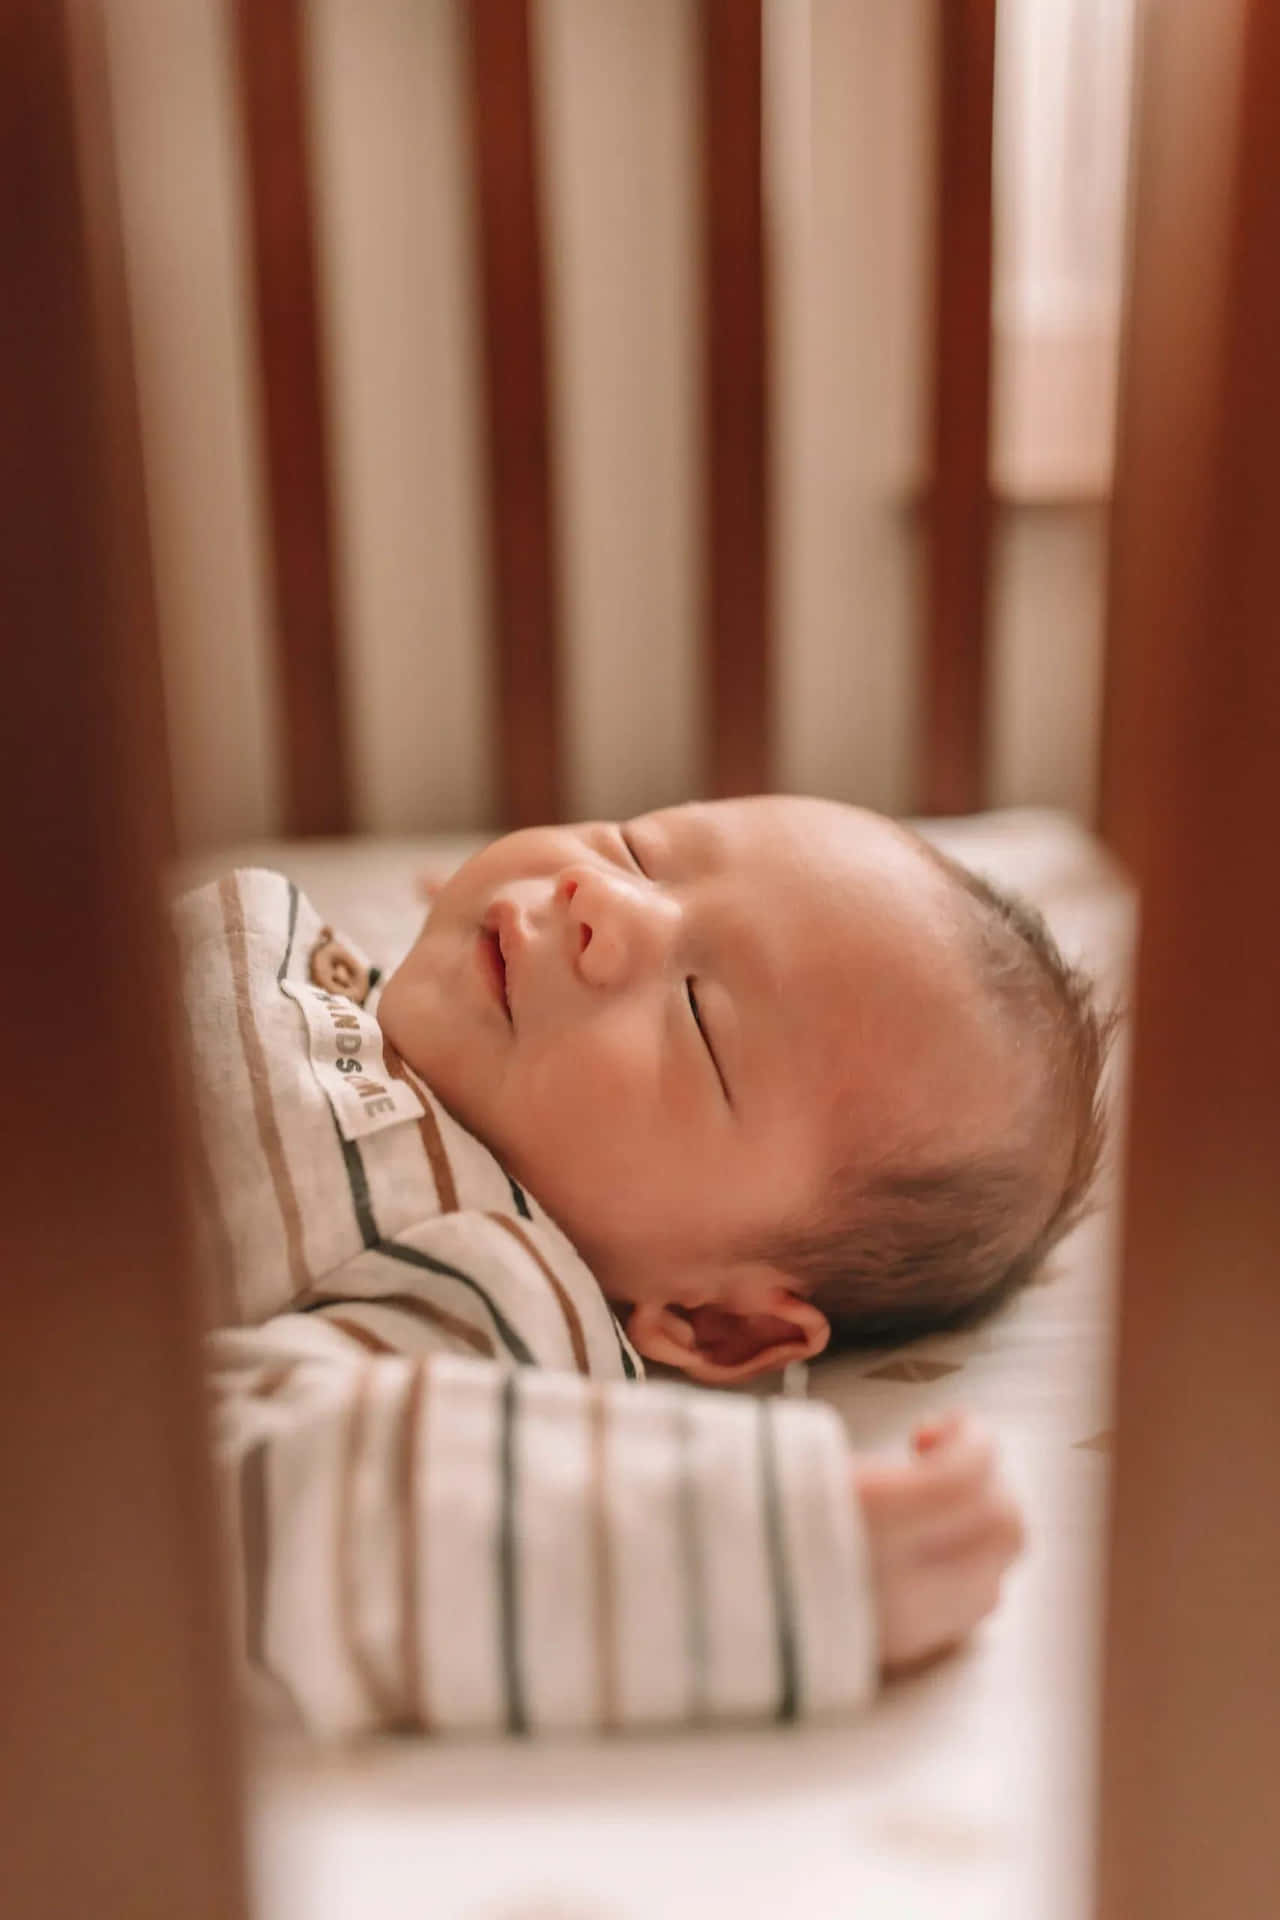 Newborn Baby Sleeping In Crib Pictures